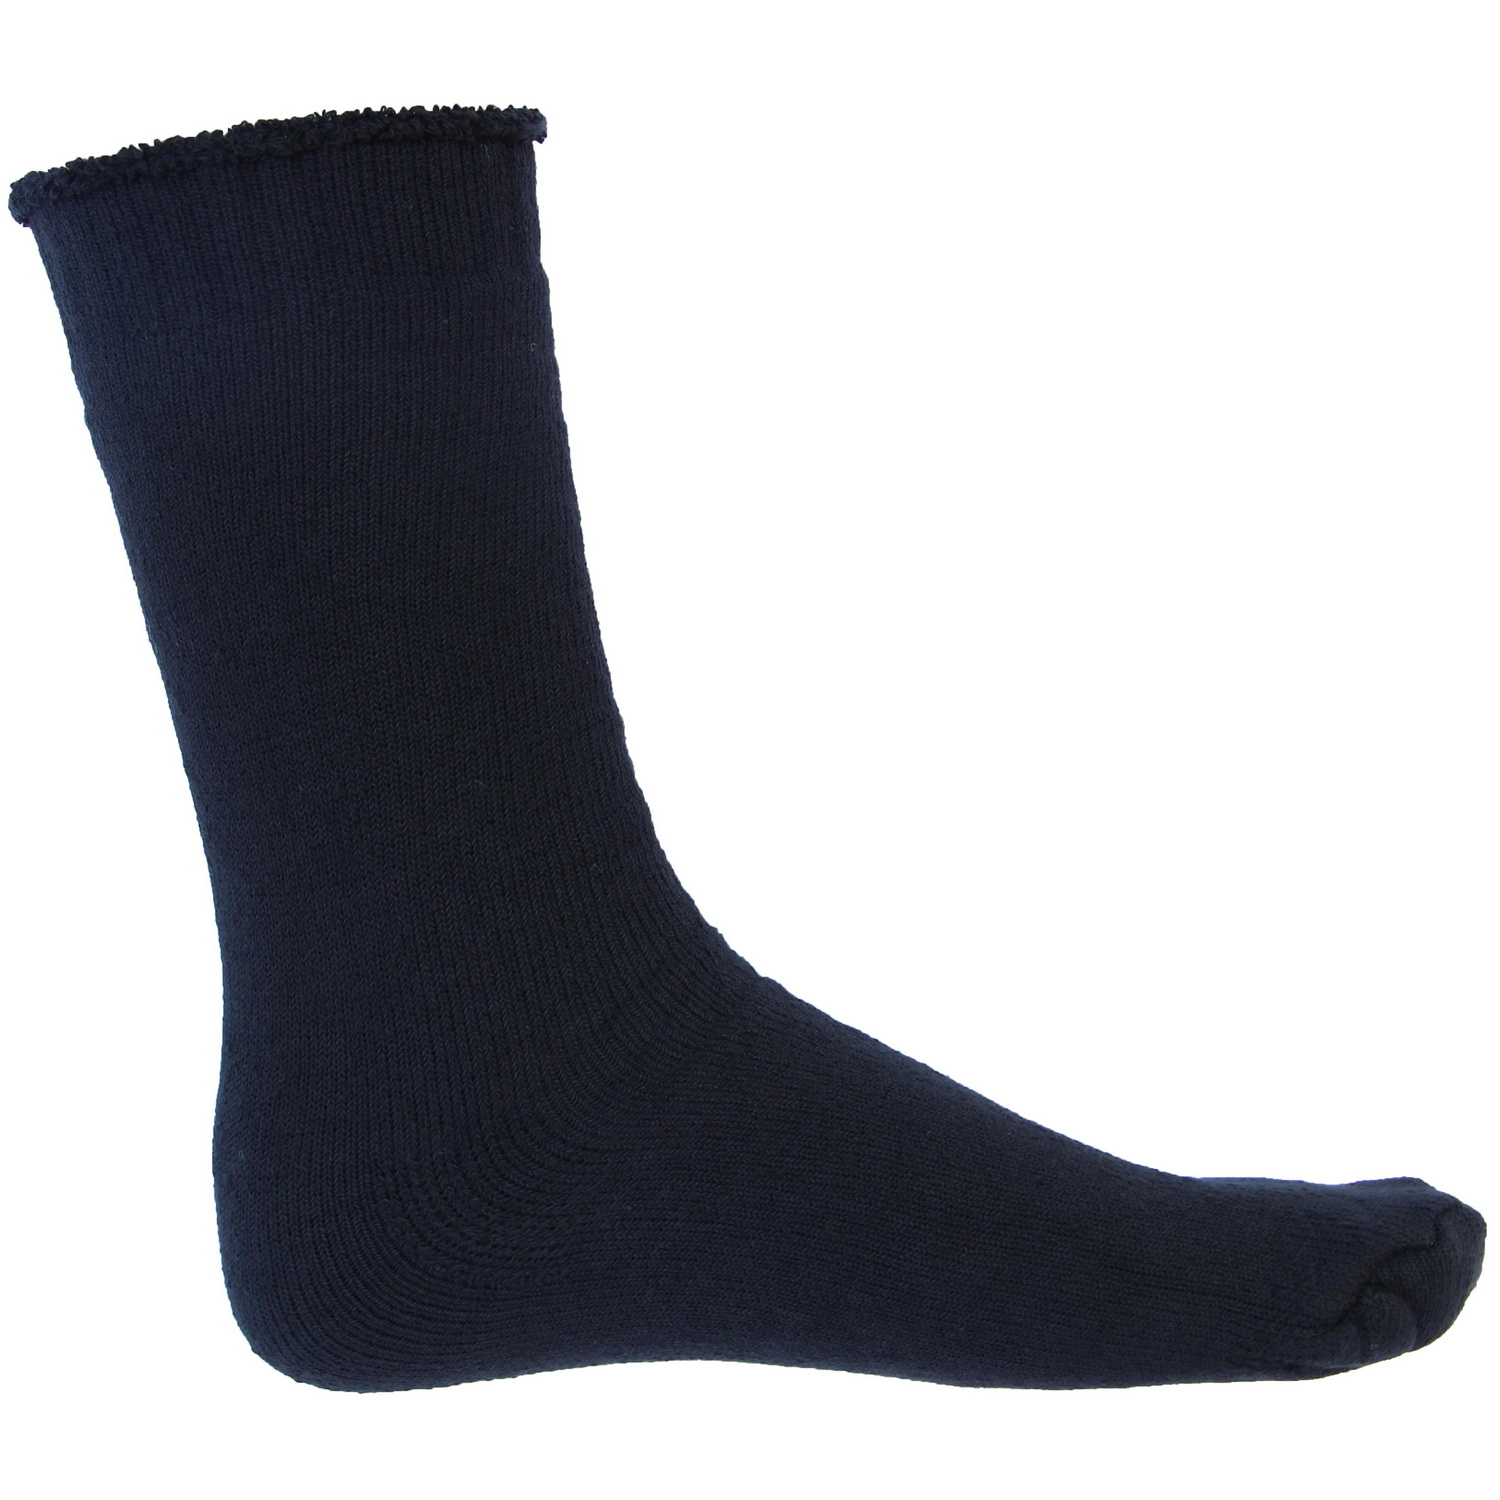 Cotton Socks - 3 pair pack